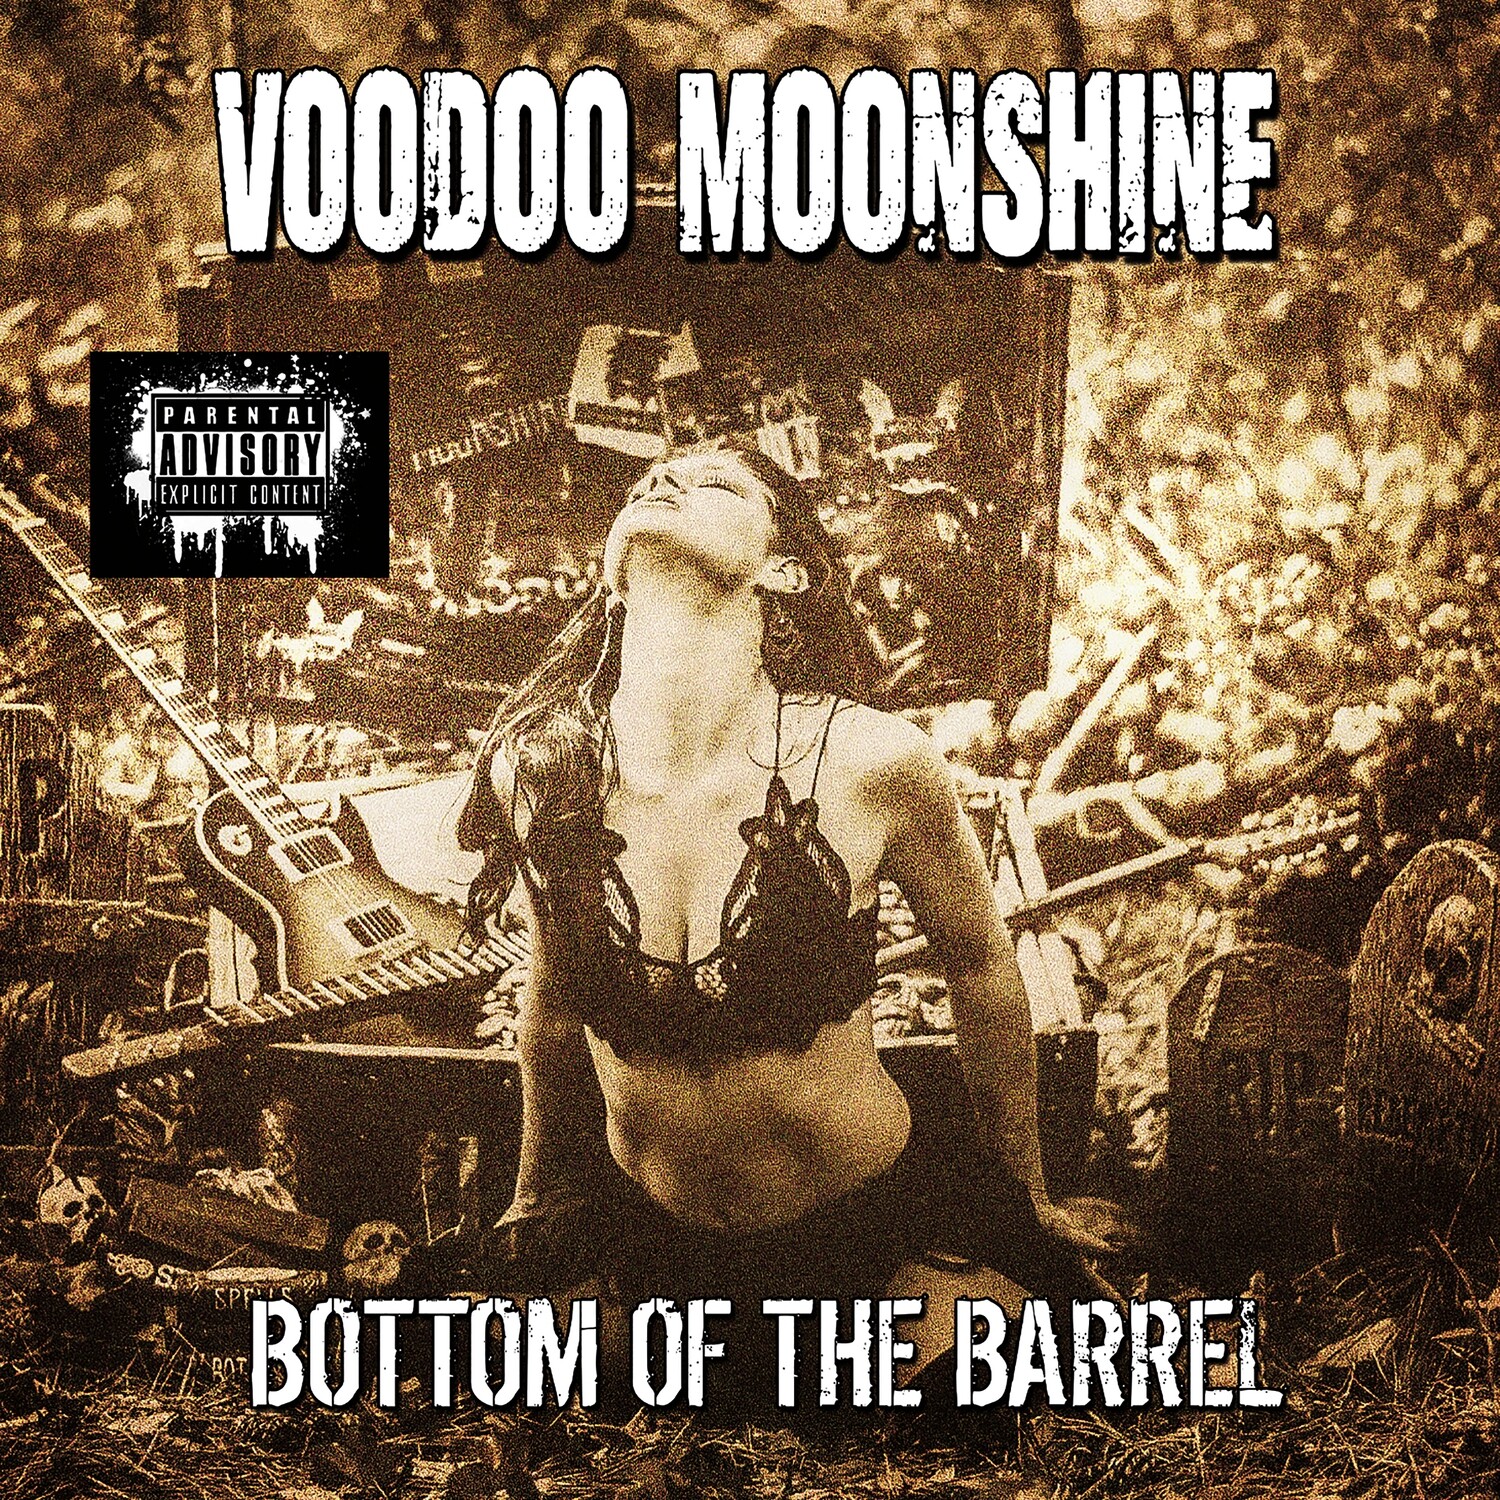 Bottom of the Barrel by Voodoo Moonshine [CD]